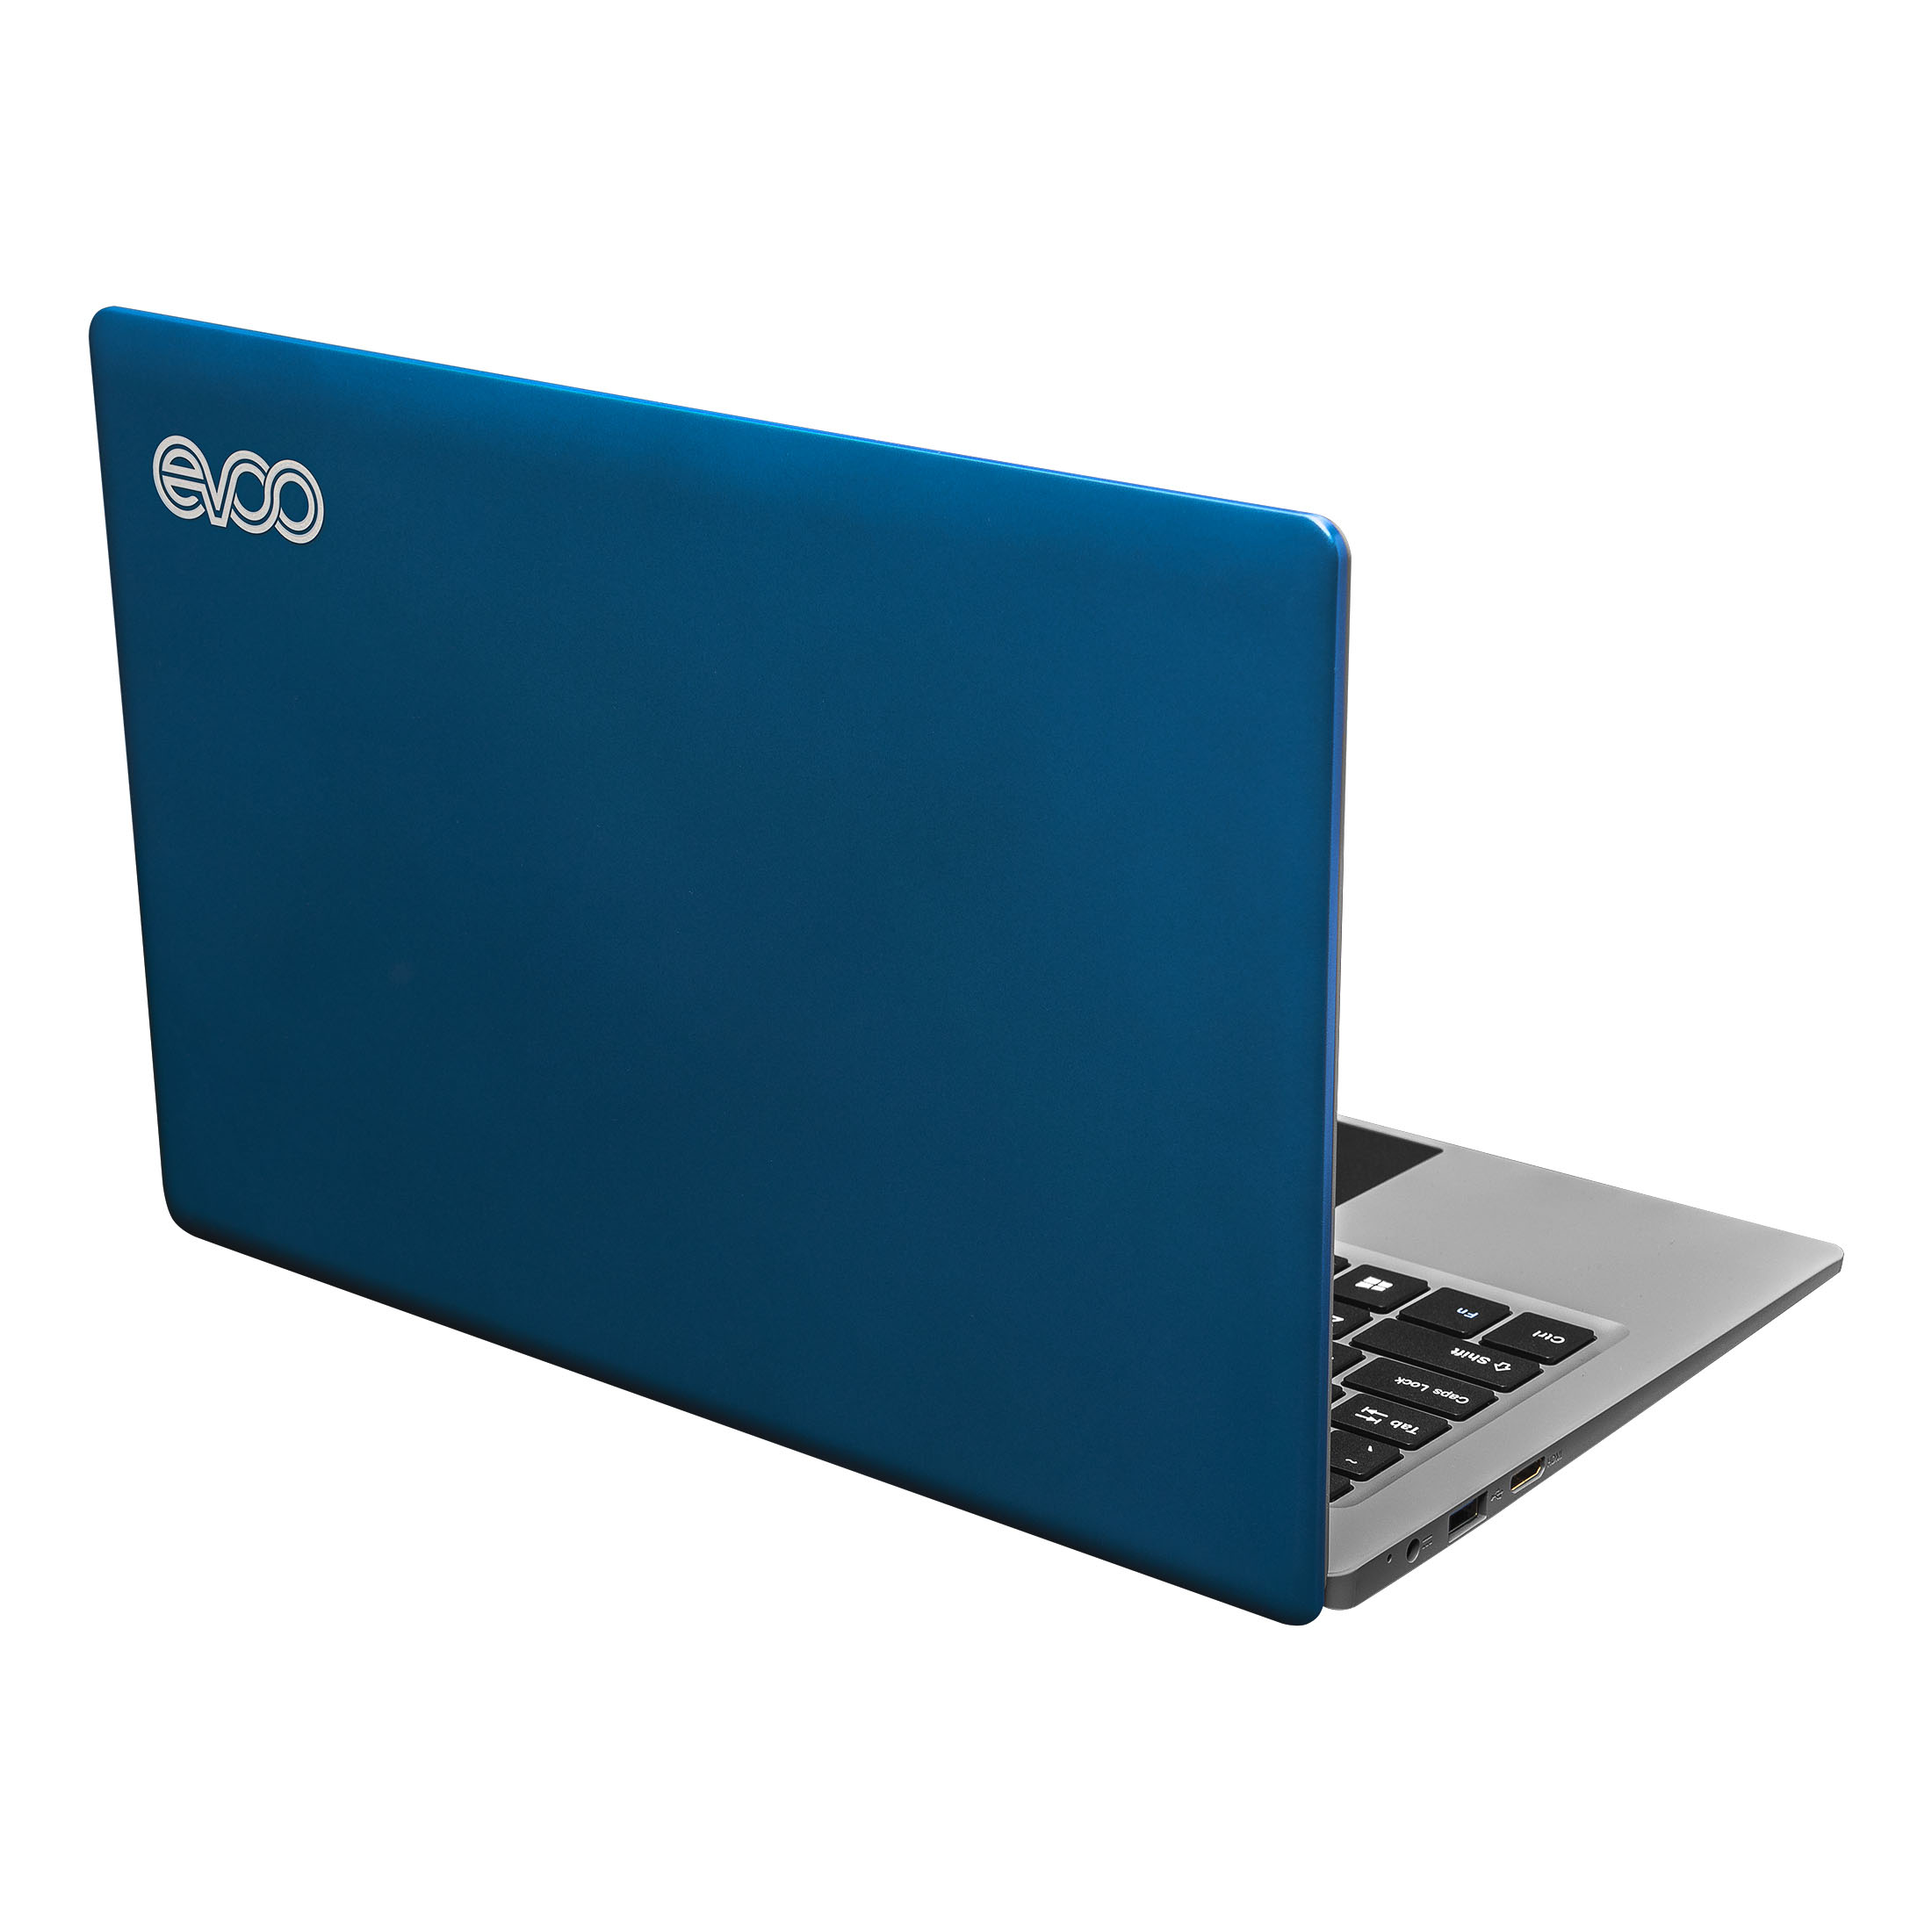 EVOO Notebook 11.6" Laptop, Intel Celeron N4000, 4GB RAM, 64GB HD, Windows 10 Home, Blue - image 4 of 5